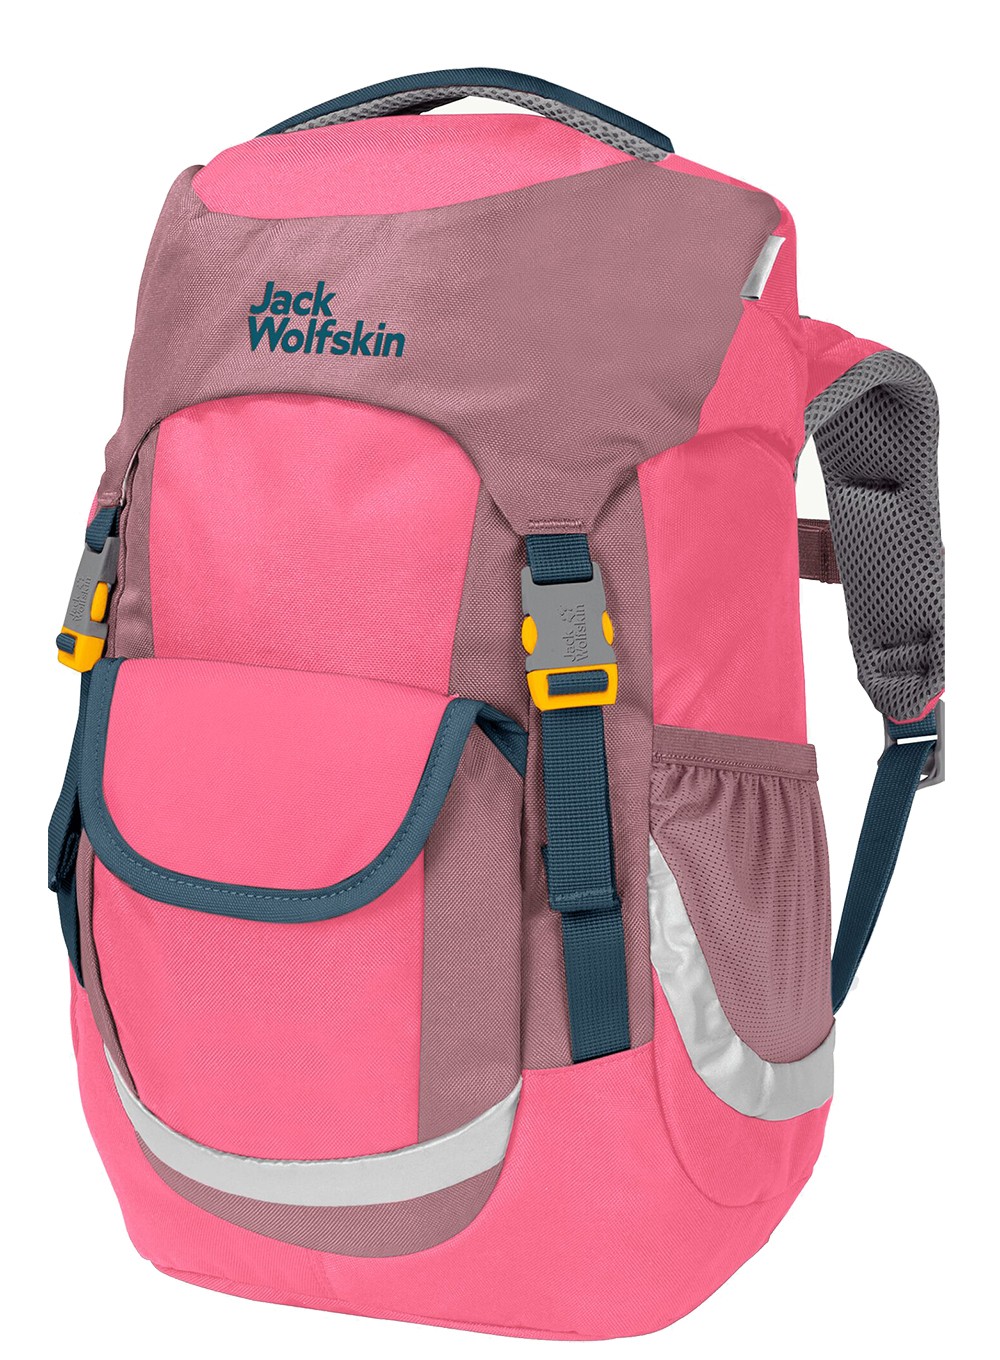 Plecak turystyczny Jack Wolfskin Kids Explorer 16 - pink lemonade  2008242-2044 - Equip.pl Warszawa